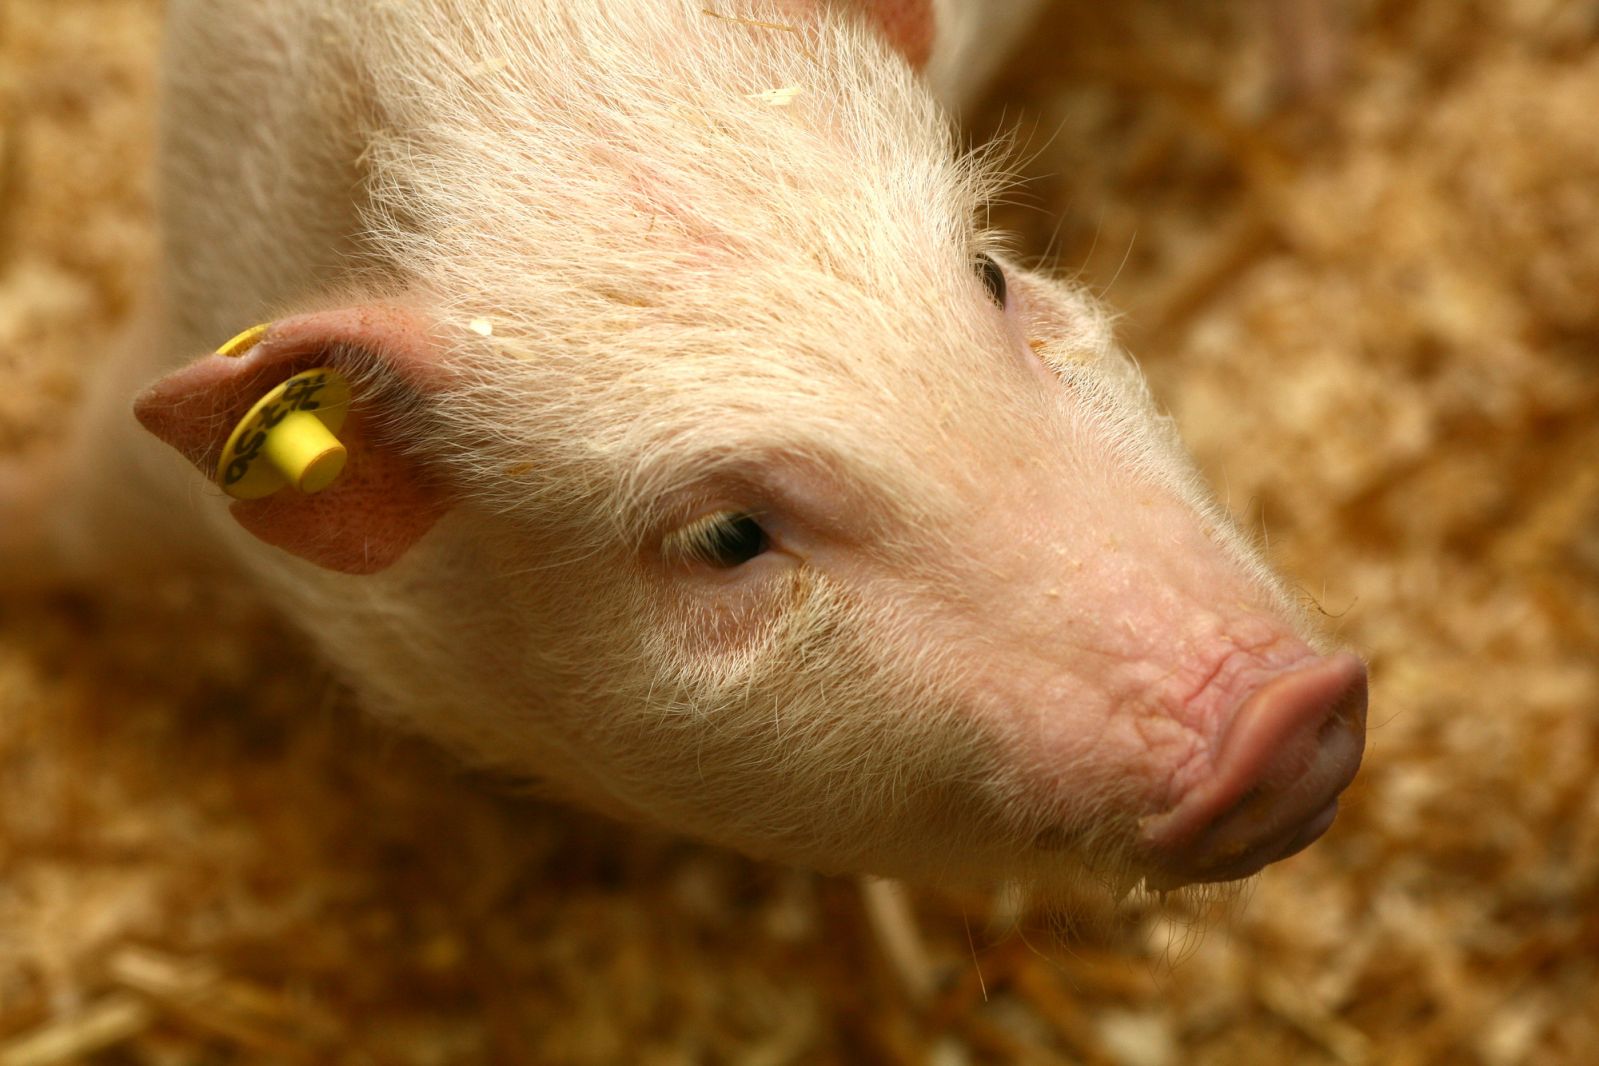 Mini-pig close-up 2